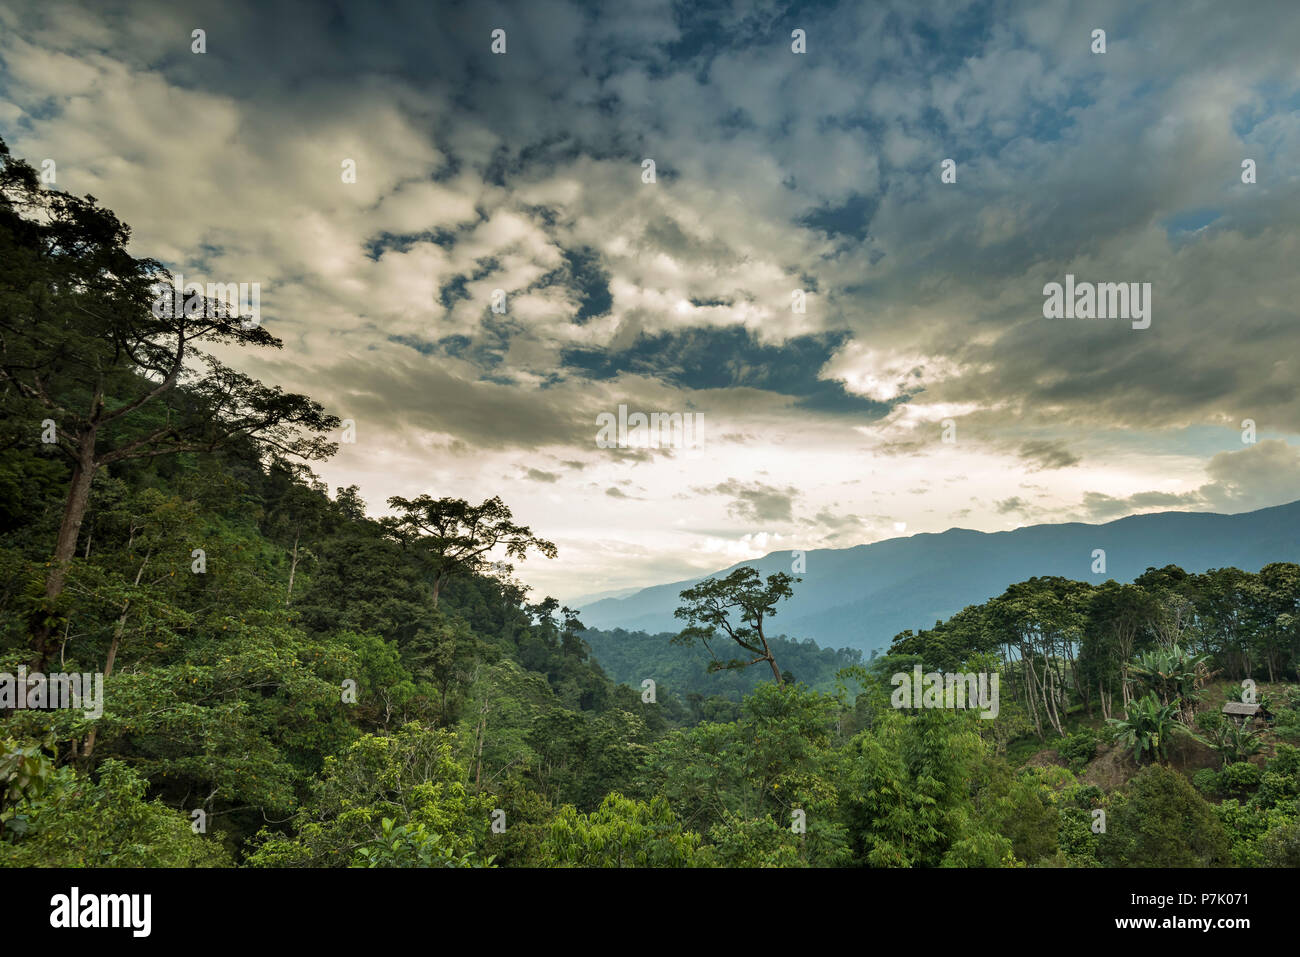 The border between Gunung Leuser National Park and farmland, Stock Photo